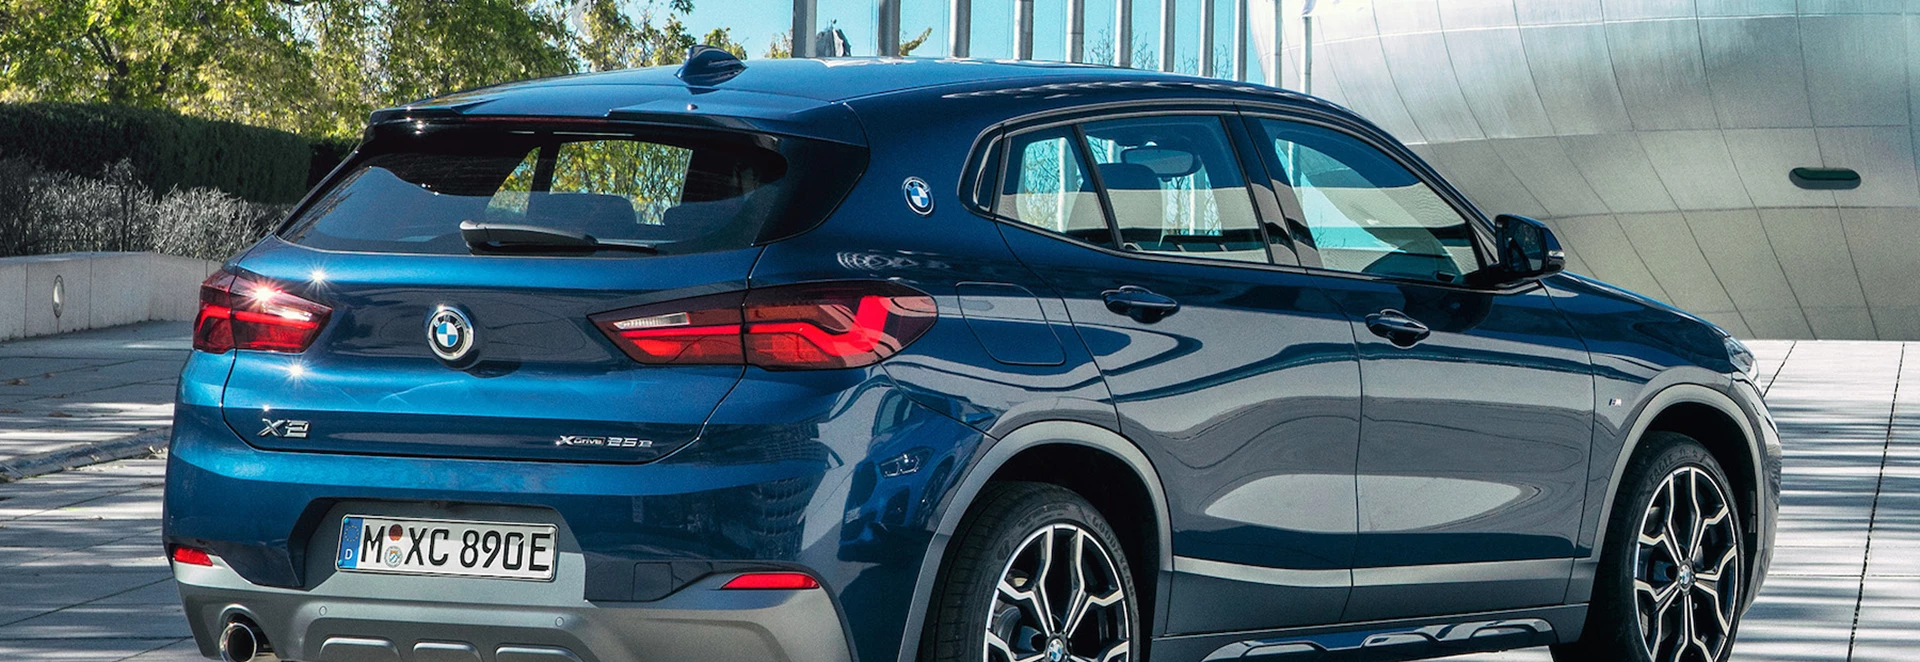 2020 BMW X2 plug-in hybrid revealed